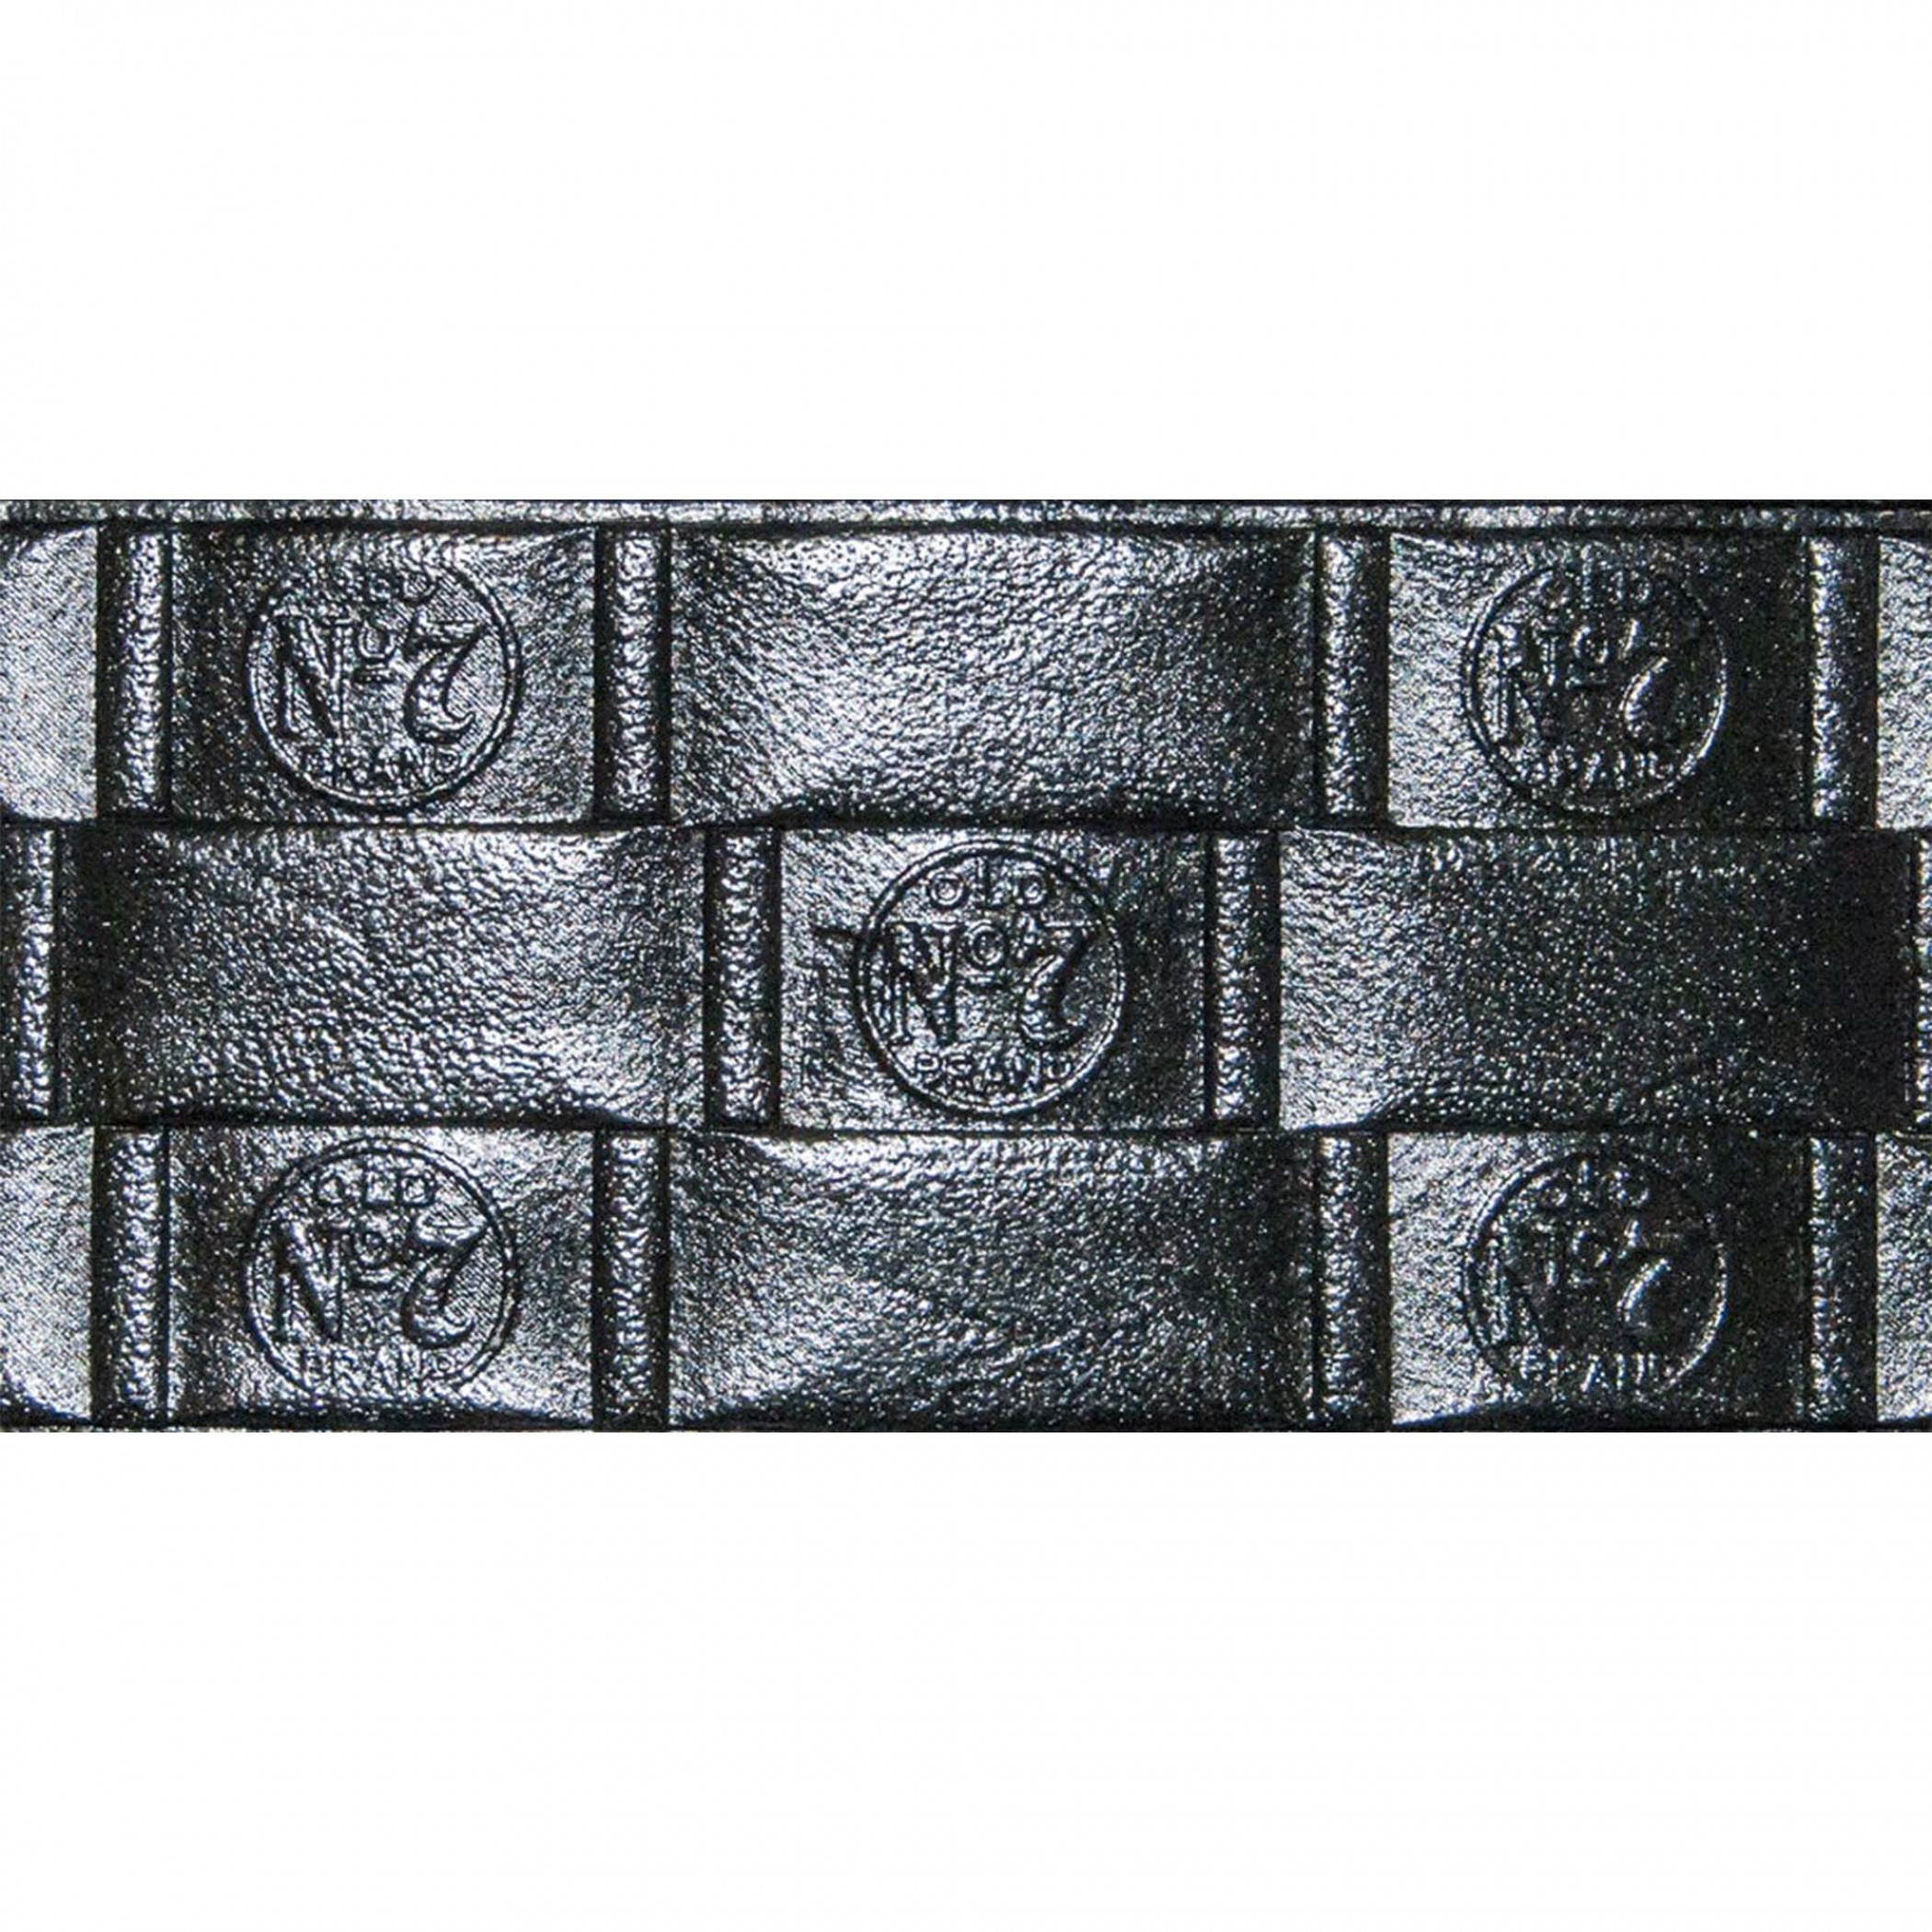 Jack Daniel's Full Grain Leather Embossed Basket Weave Belt